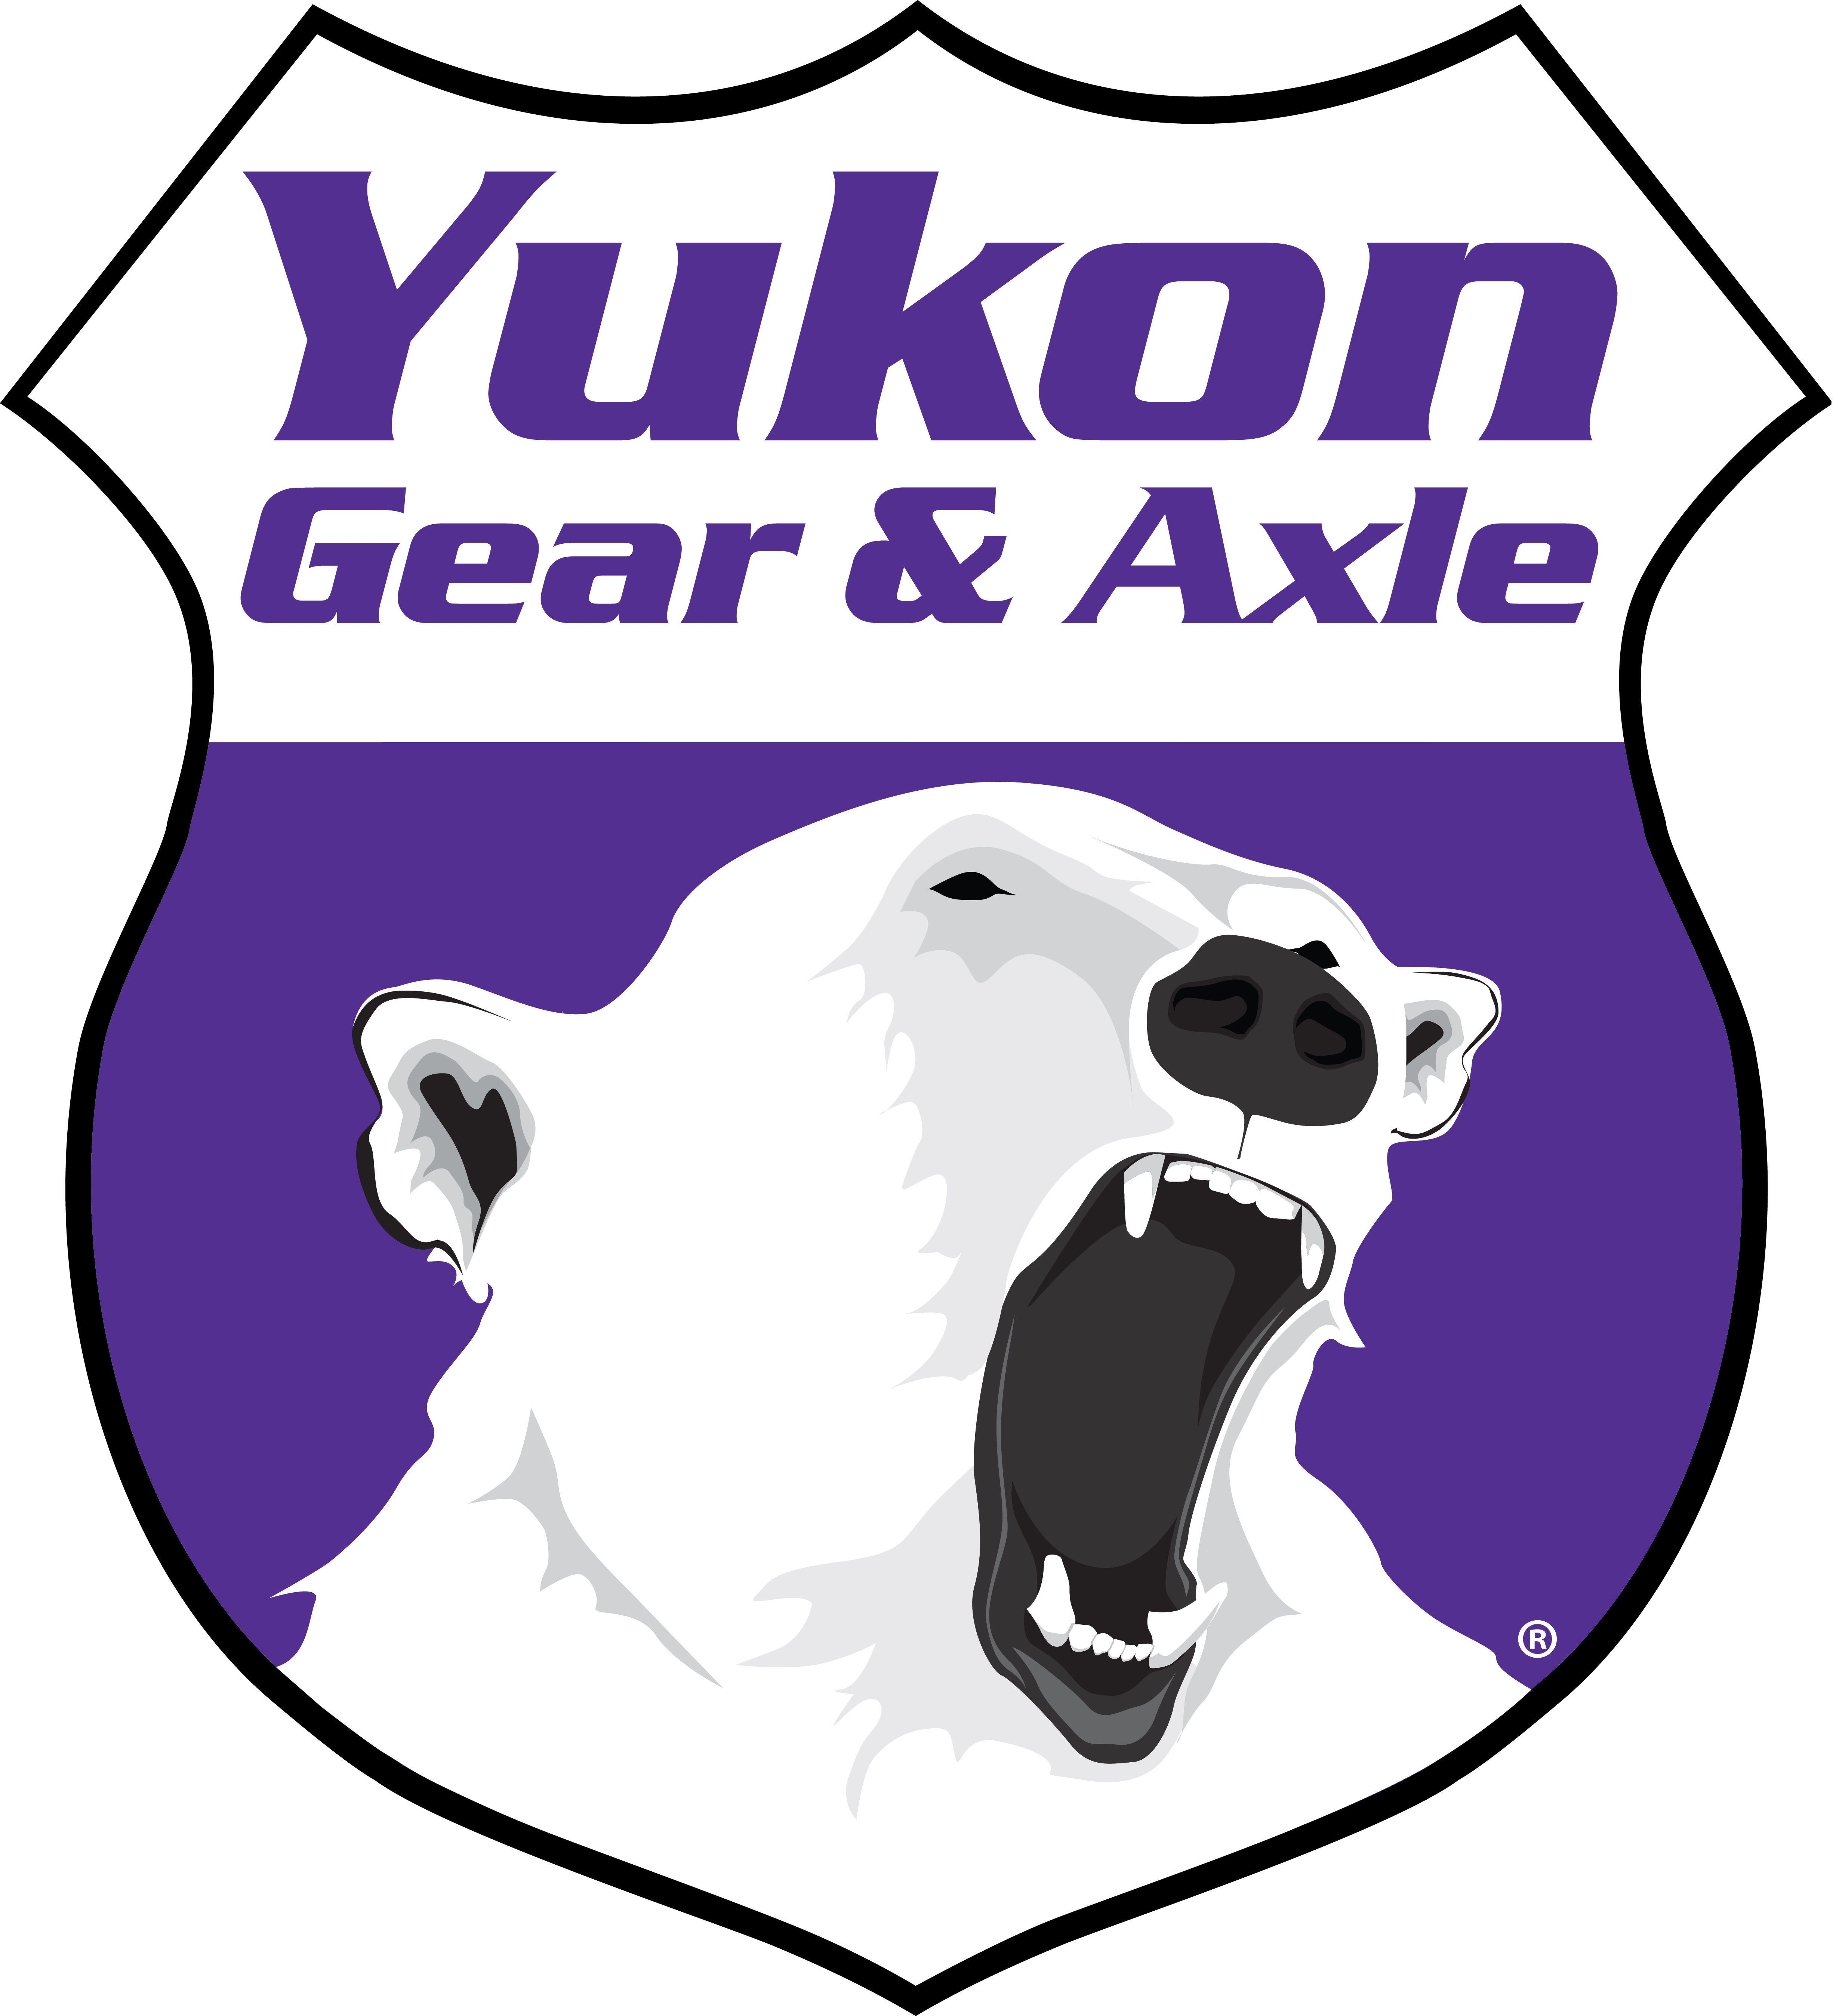 Yukon Master Overhaul Kit for 2014 & up RAM 2500 AAM 11.5" 